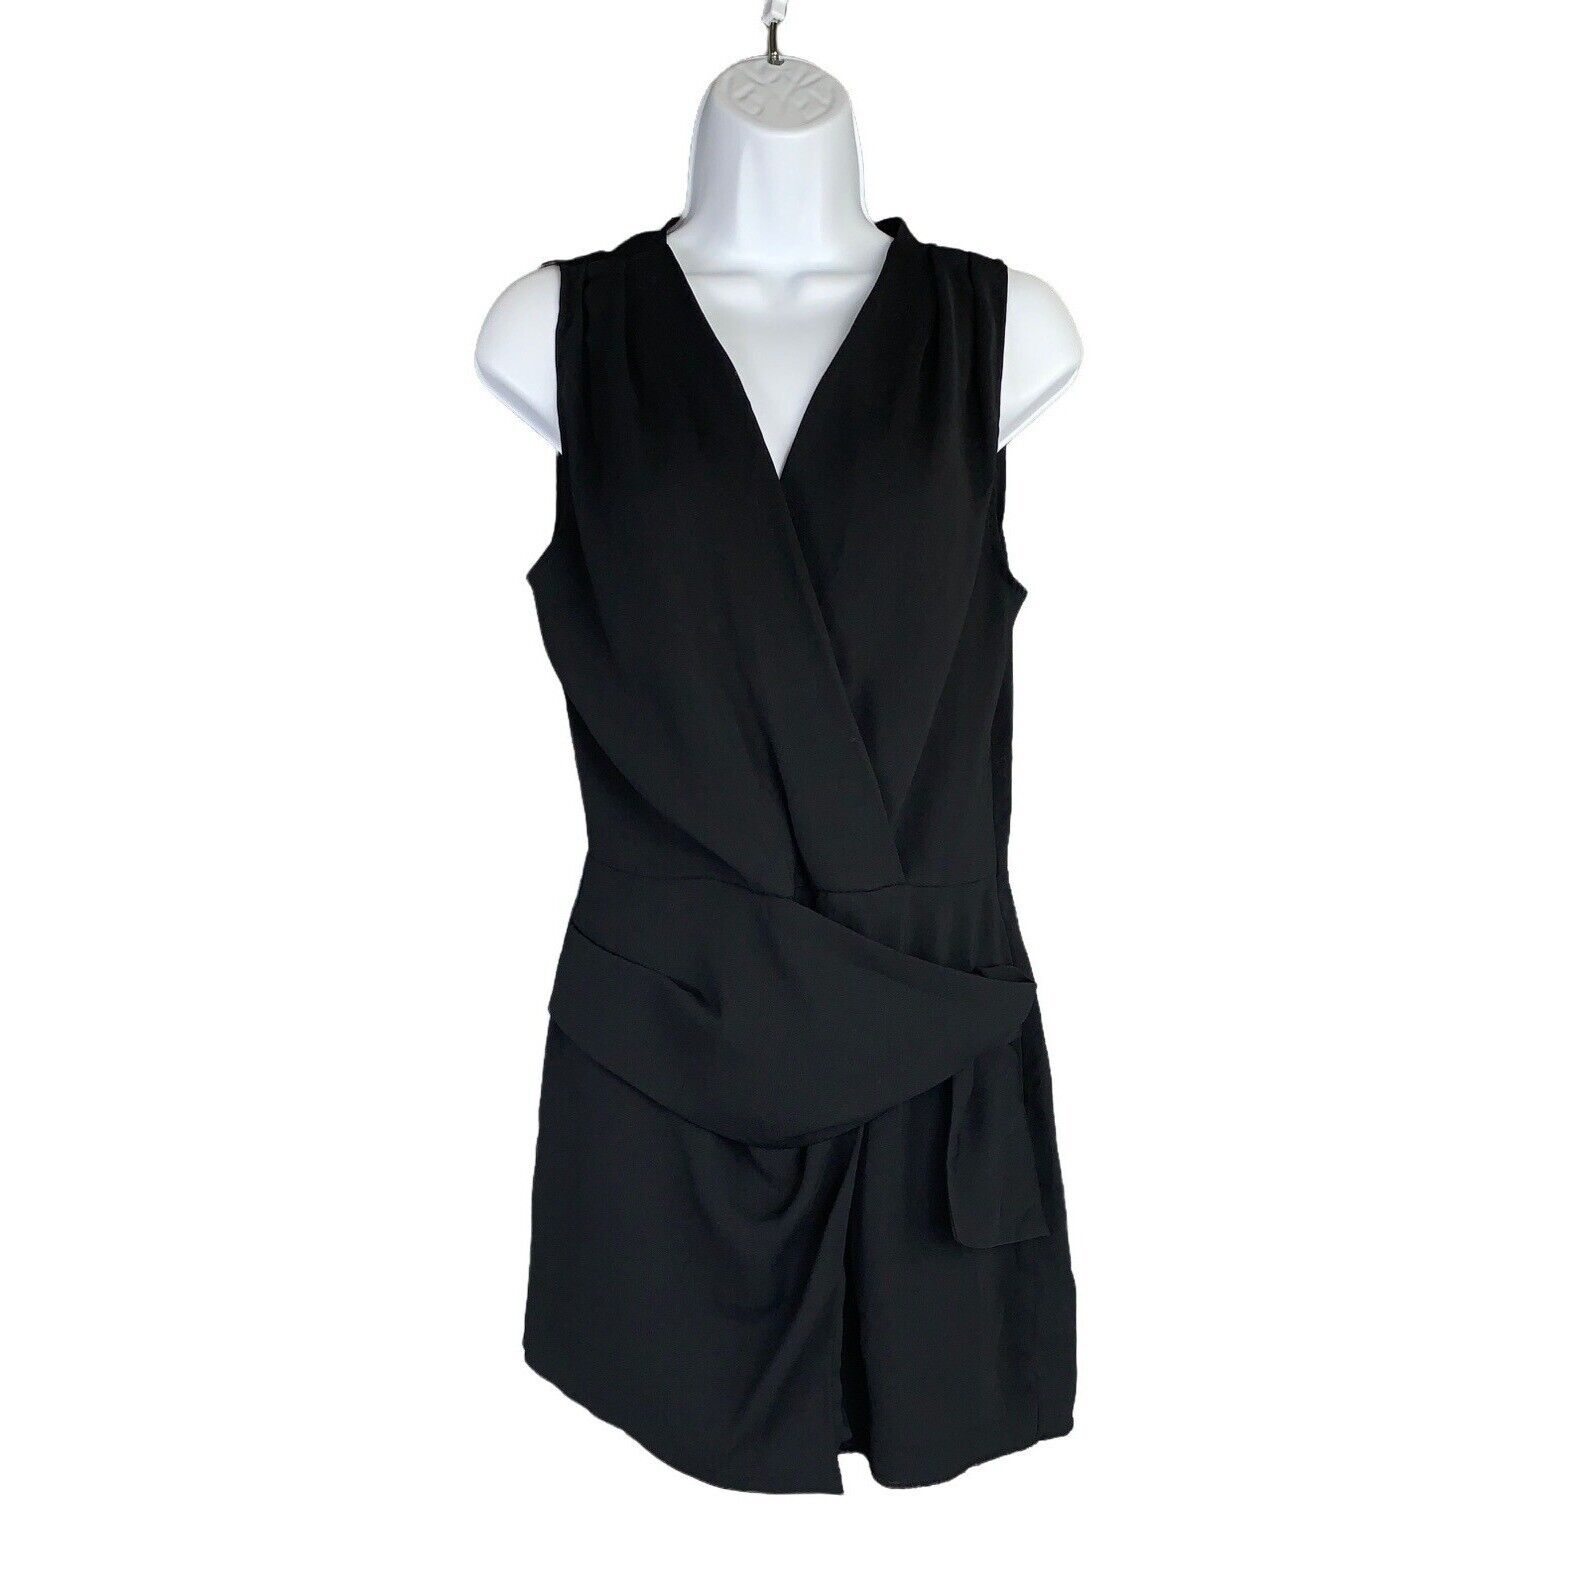 Zara Basic Collection Romper Black Size Medium - image 2